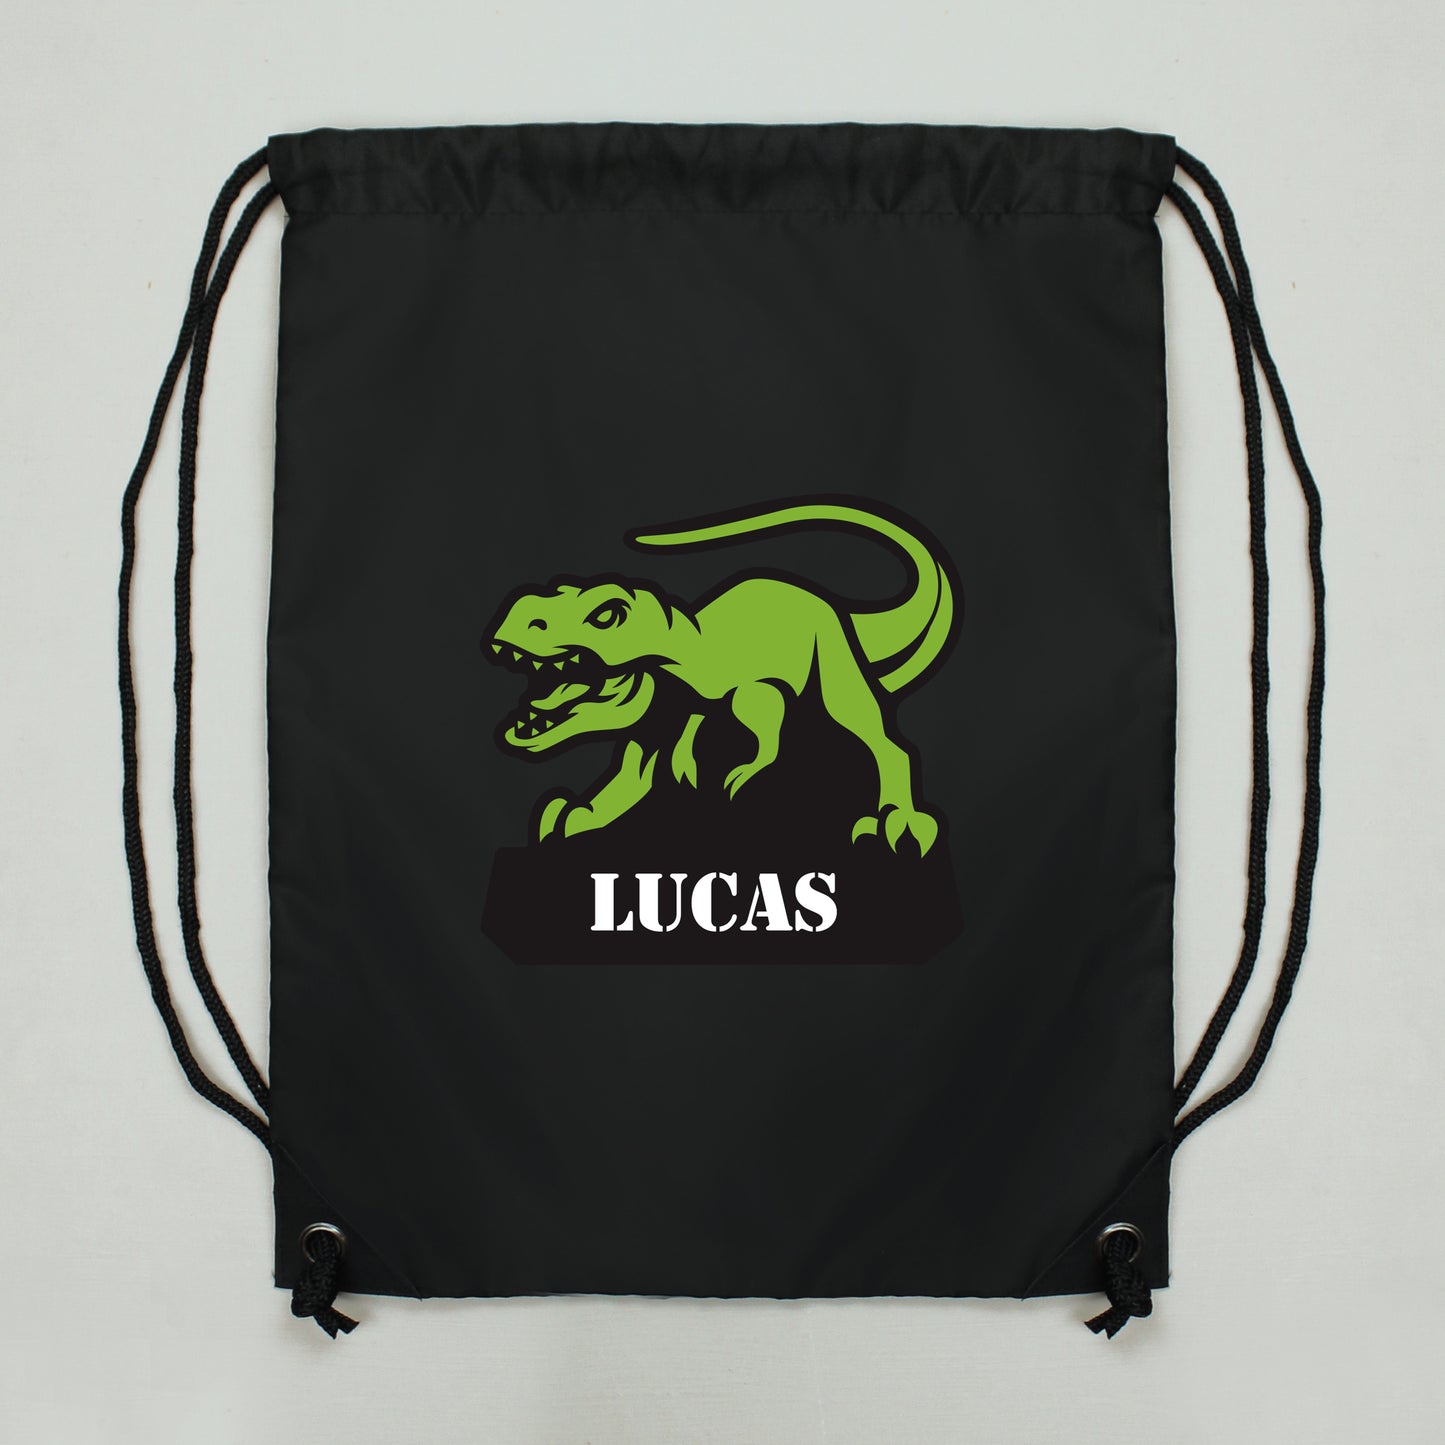 Personalised Dinosaur Swimming, Gym or Kit Bag - Black